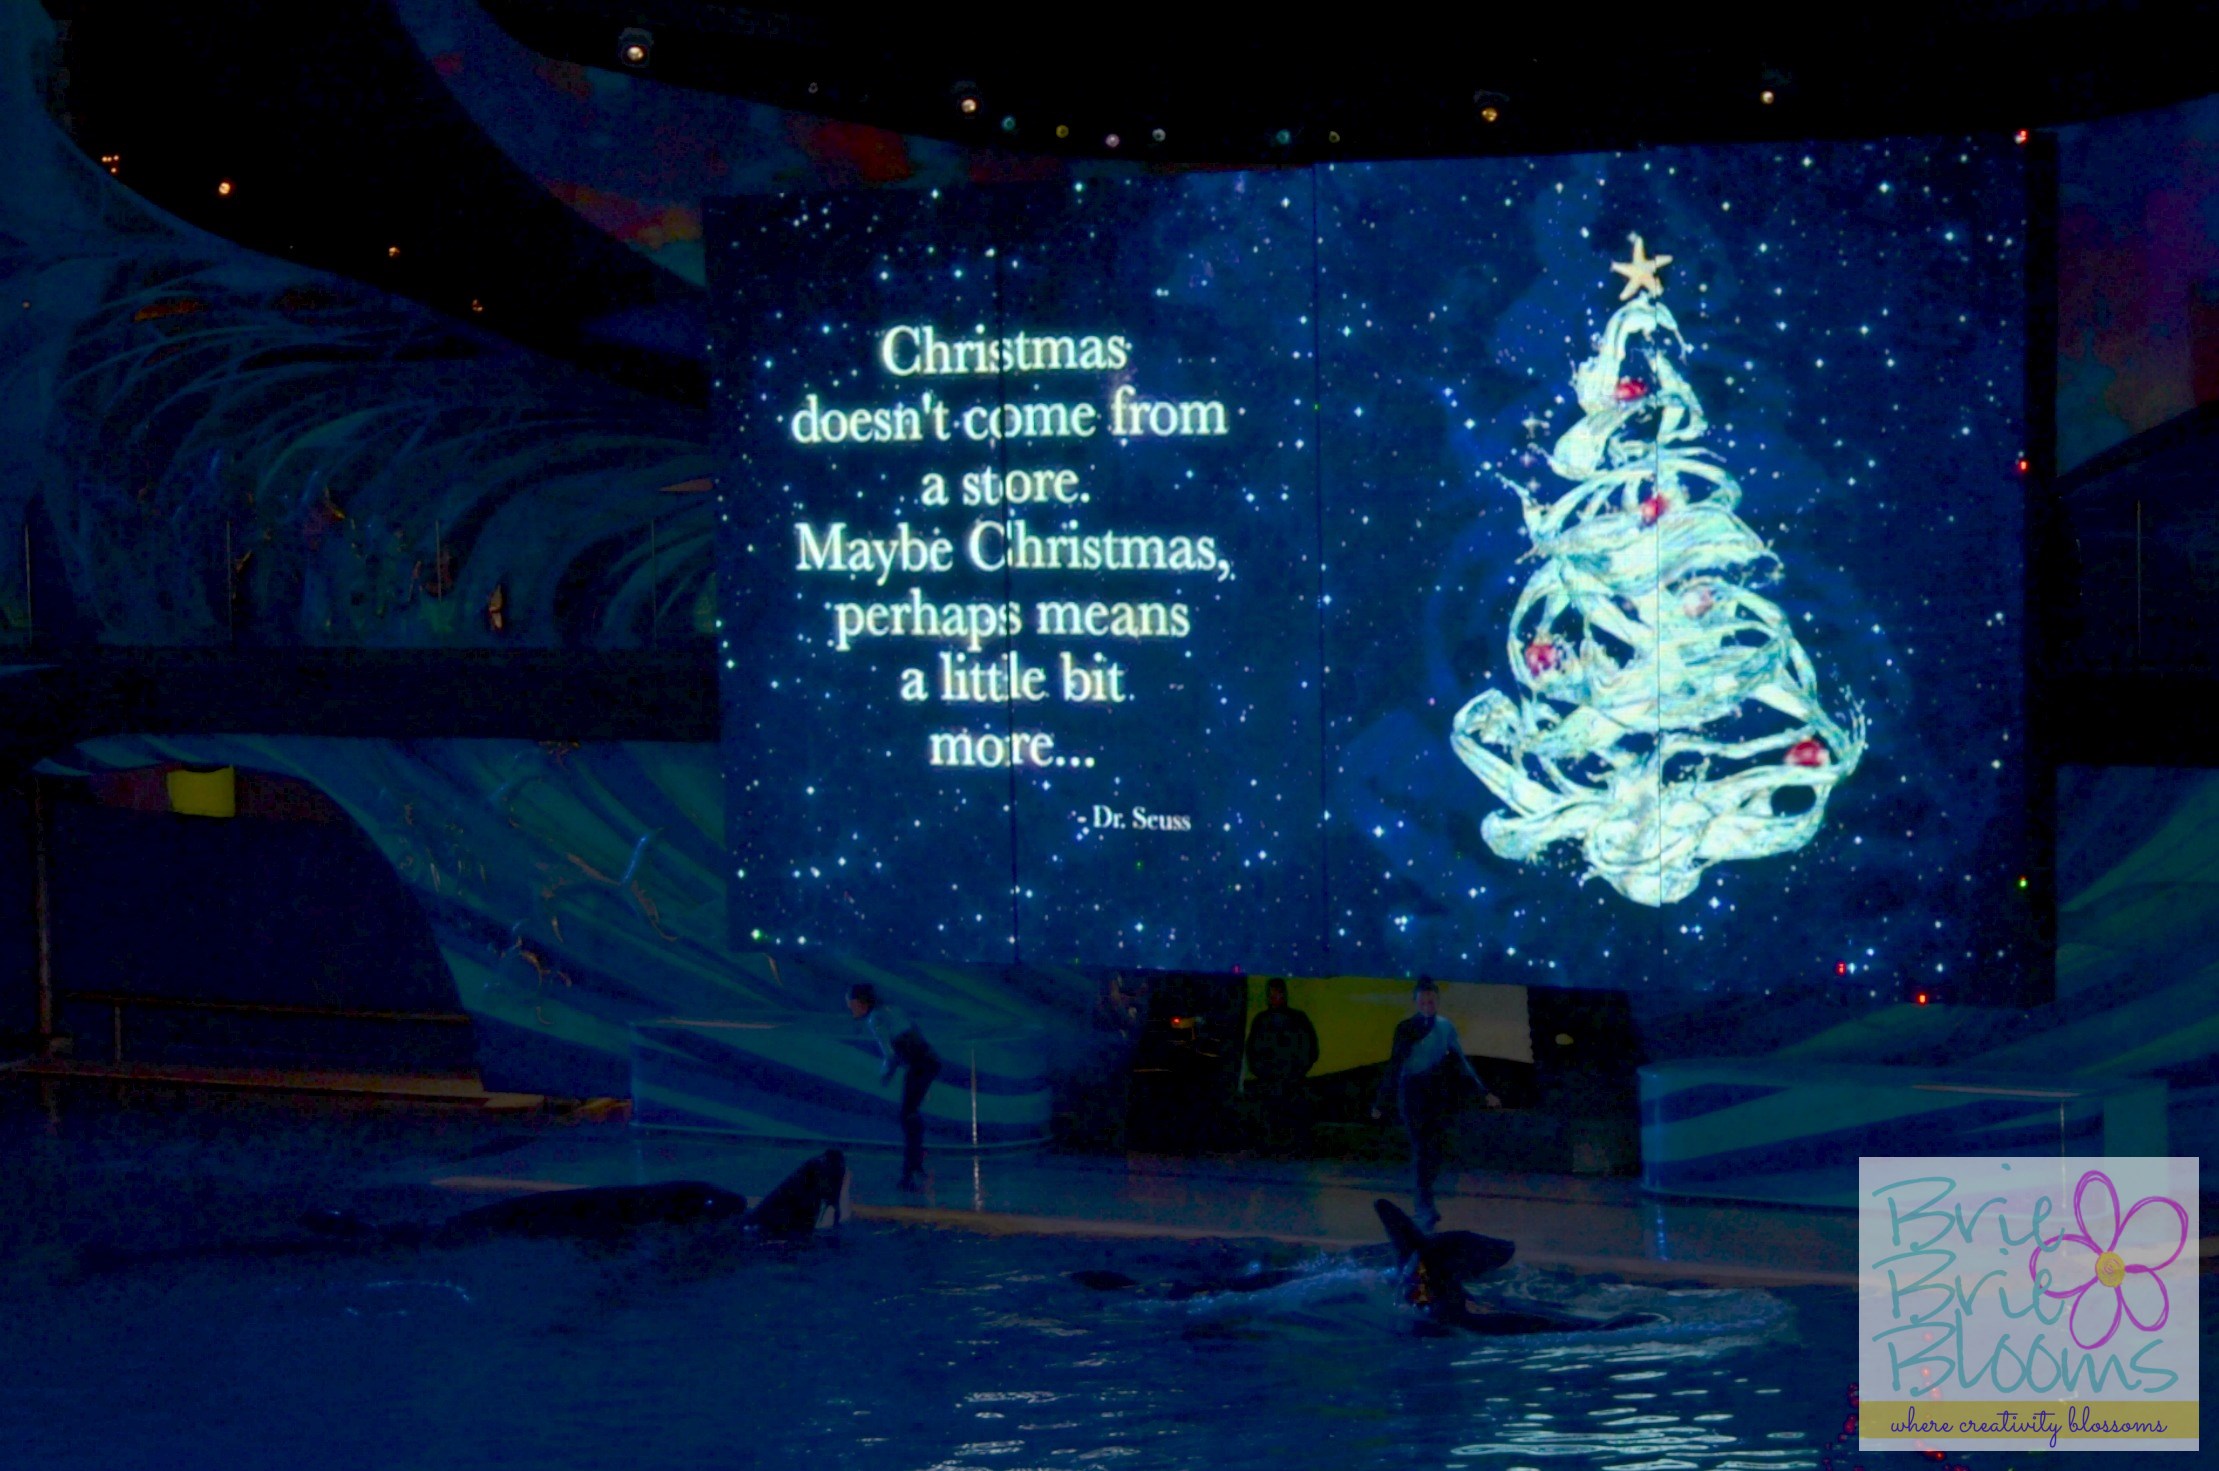 Shamu's Christmas Holiday Show at SeaWorld San Diego